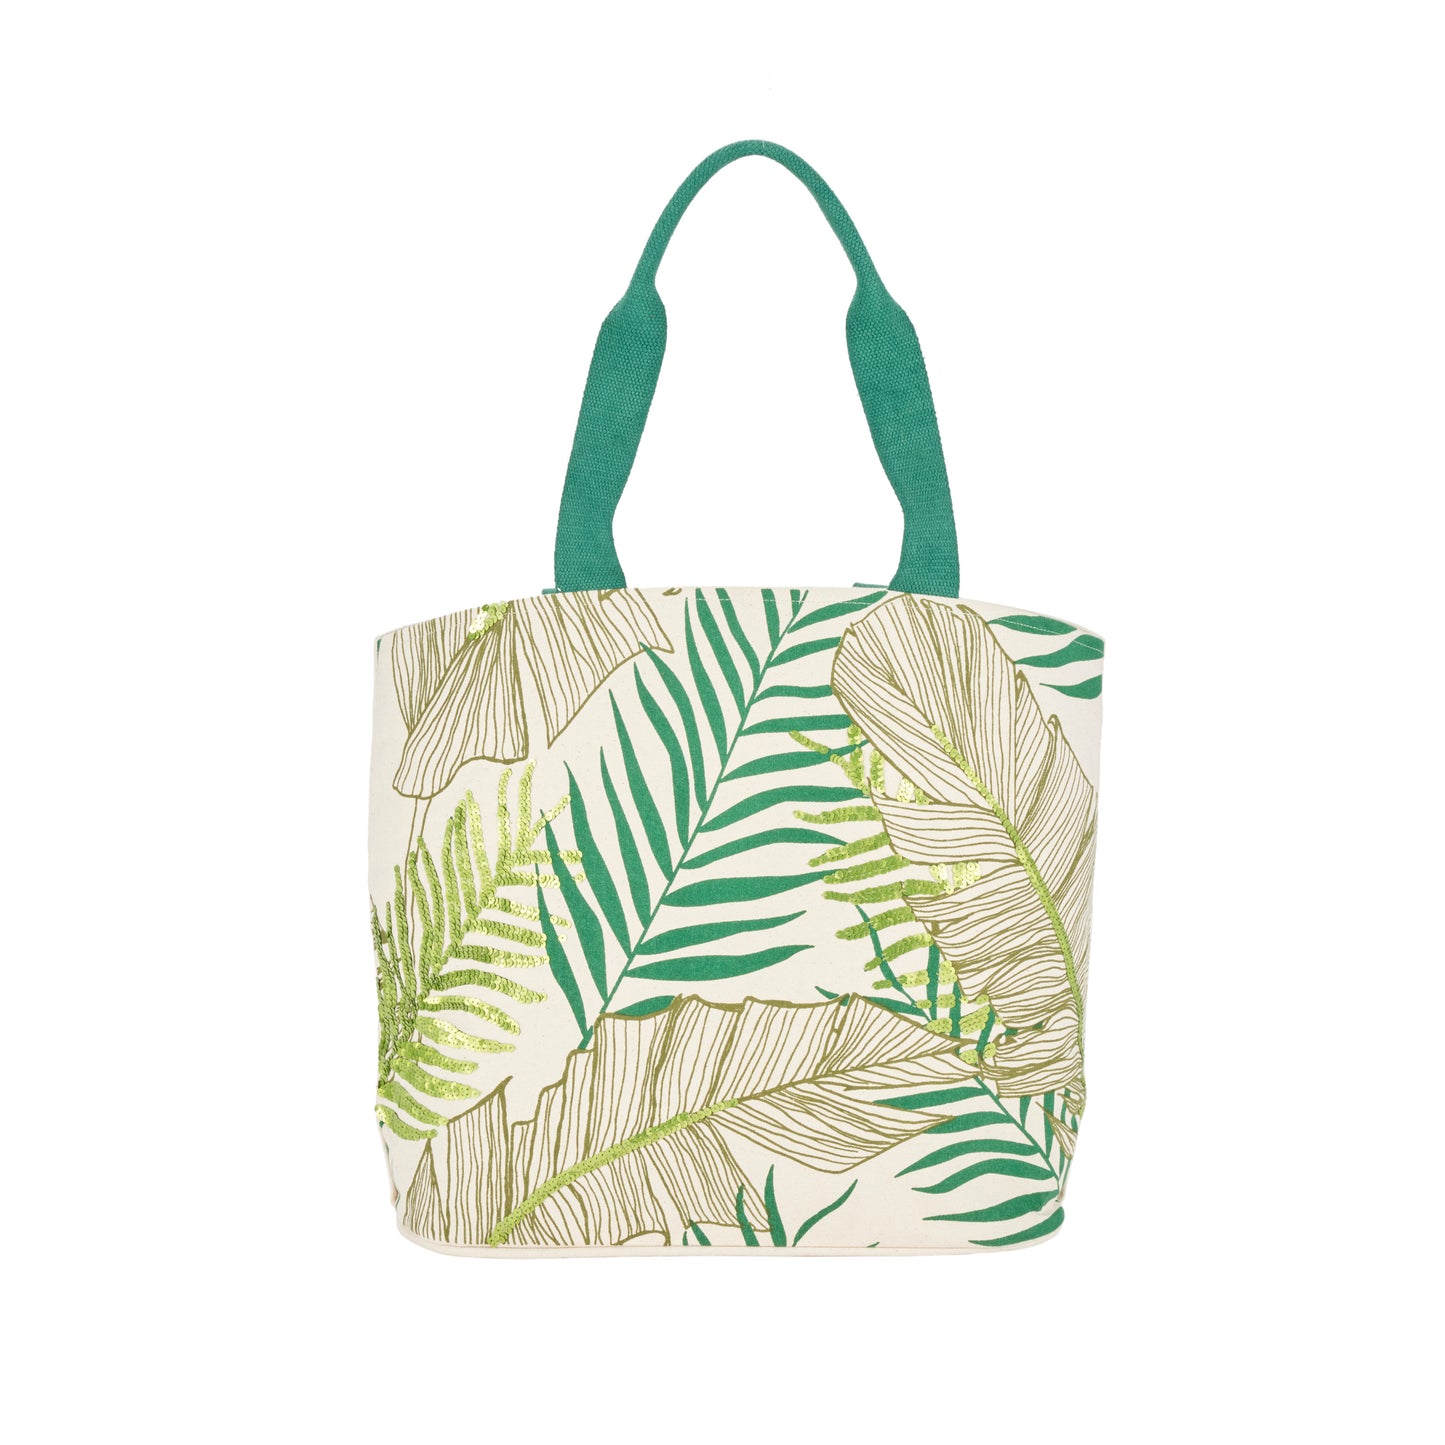 Handbags & Crossbody KV013 Cotton Palm Leaf Bag From Mina Victory By Nourison Rugs